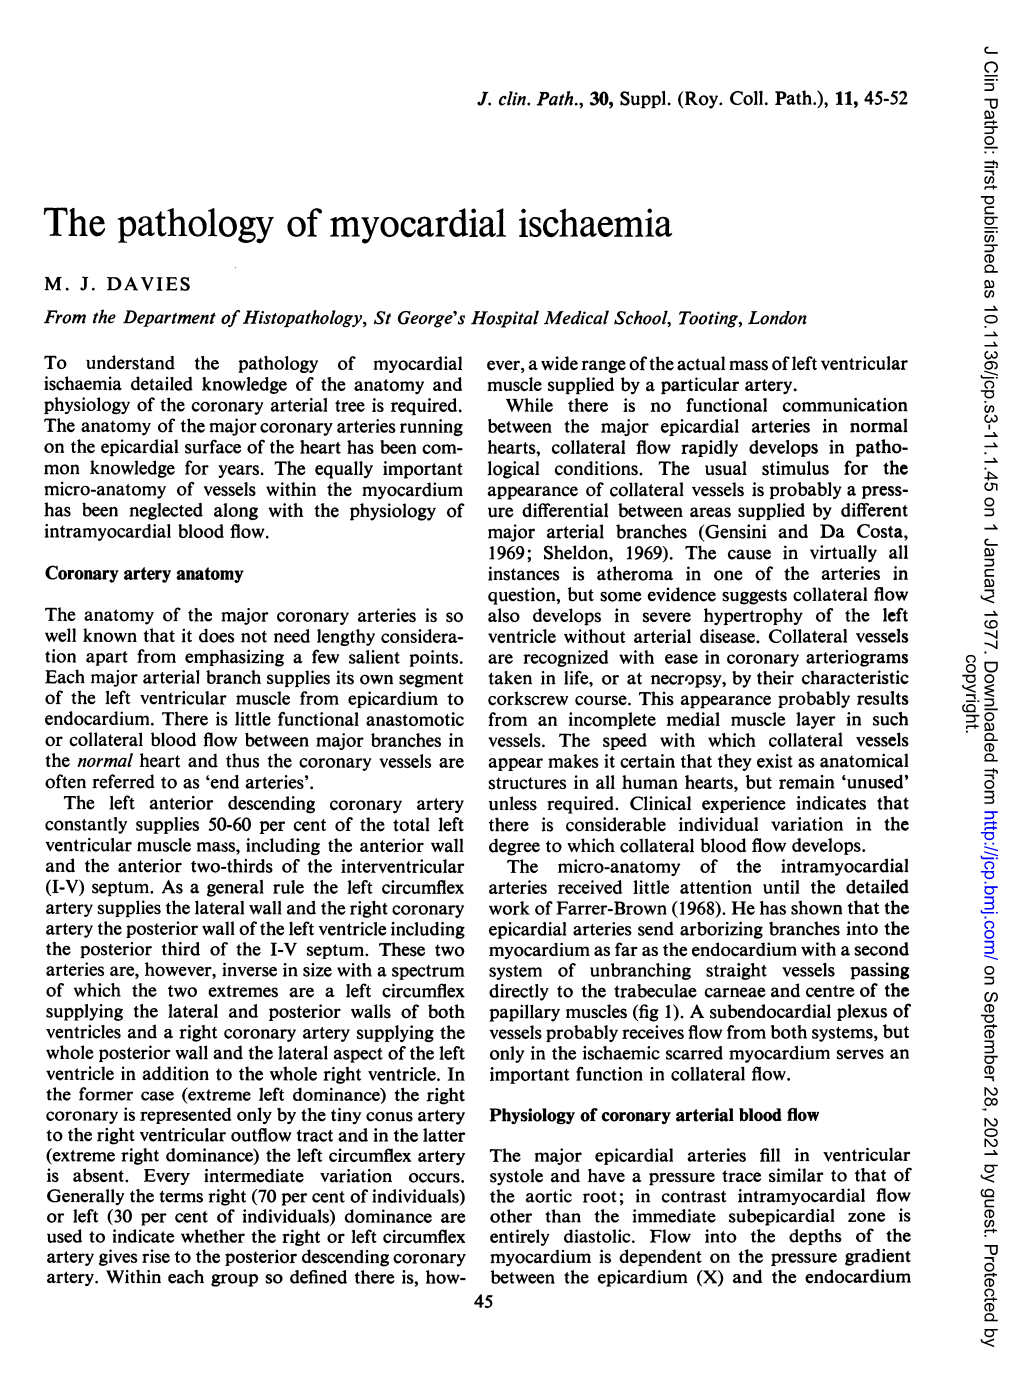 The Pathology of Myocardial Ischaemia